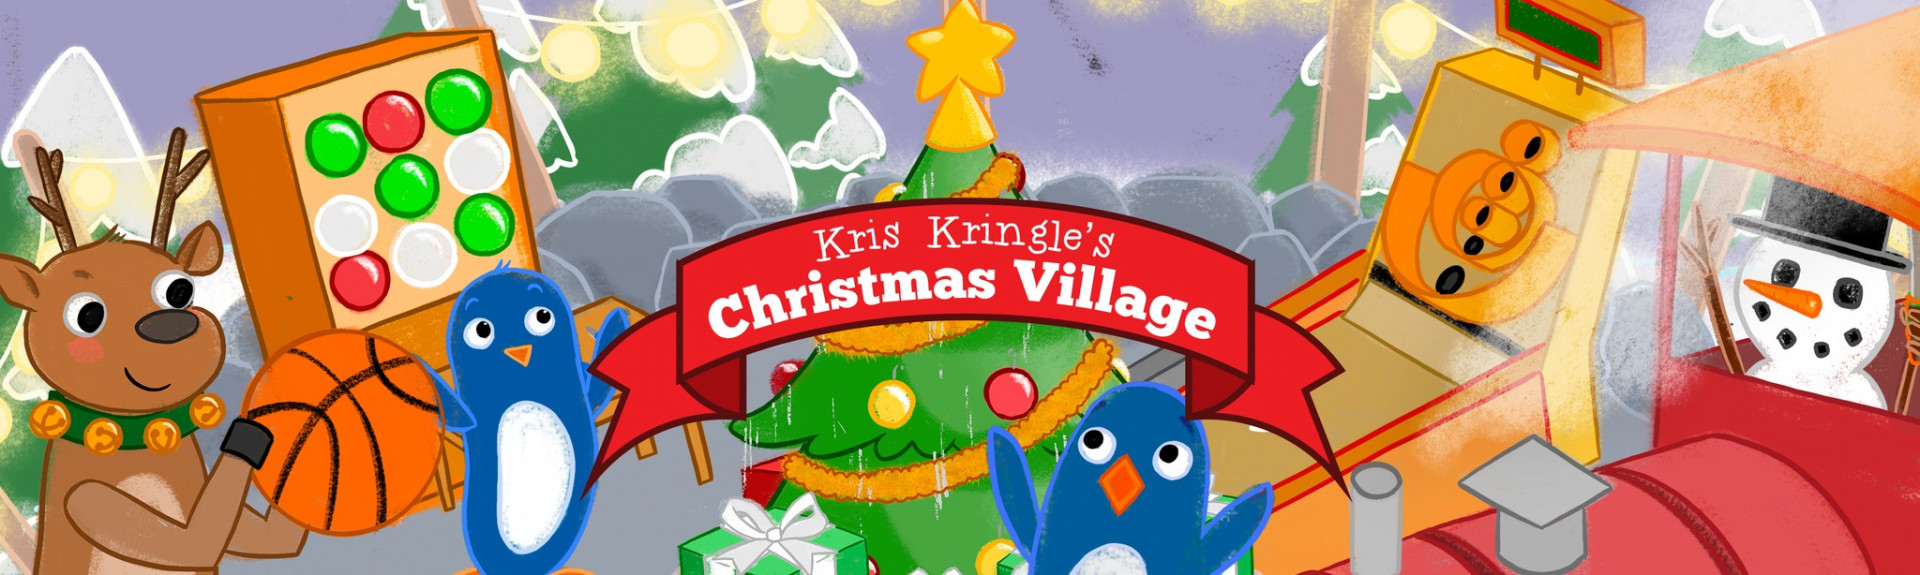 Kris Kringle's Christmas Village